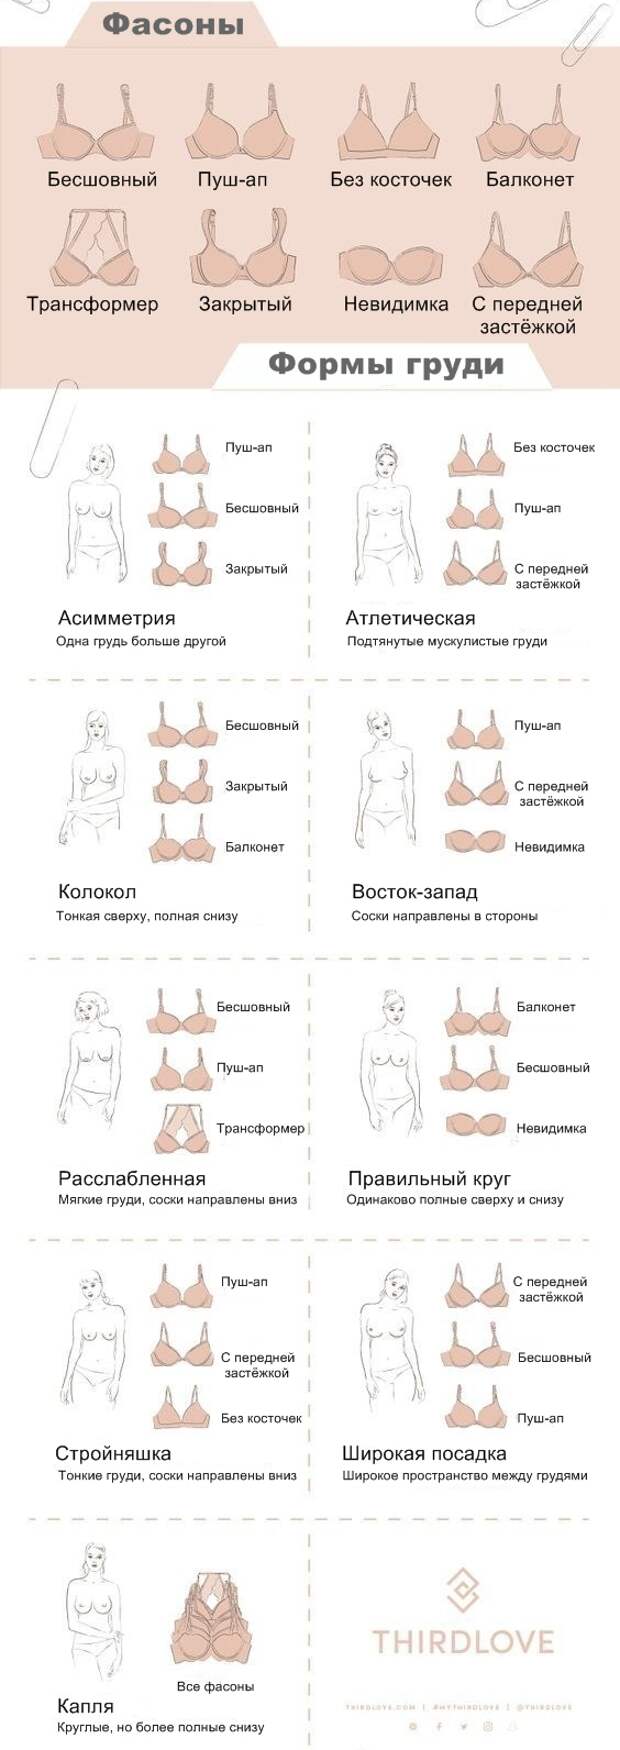 виды форм груди женщин фото 18